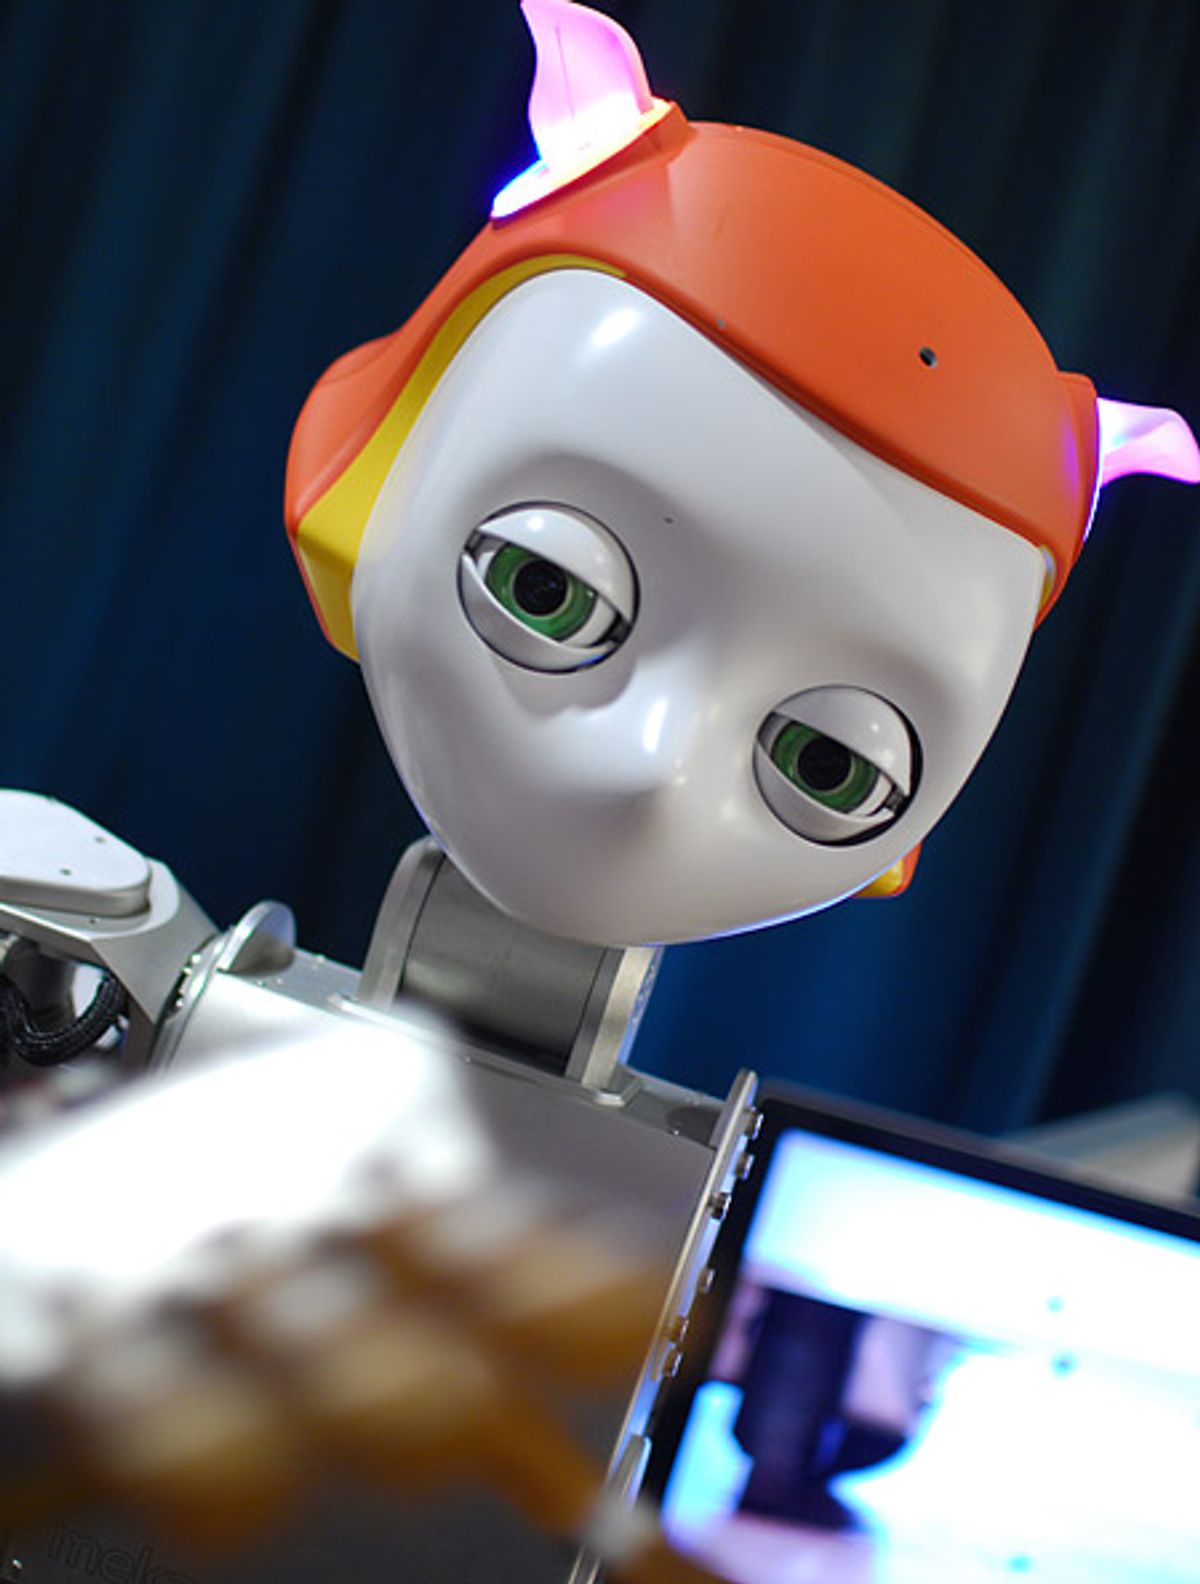 Video: Meka Robotics Talks Up its Anime-Style Expressive Head